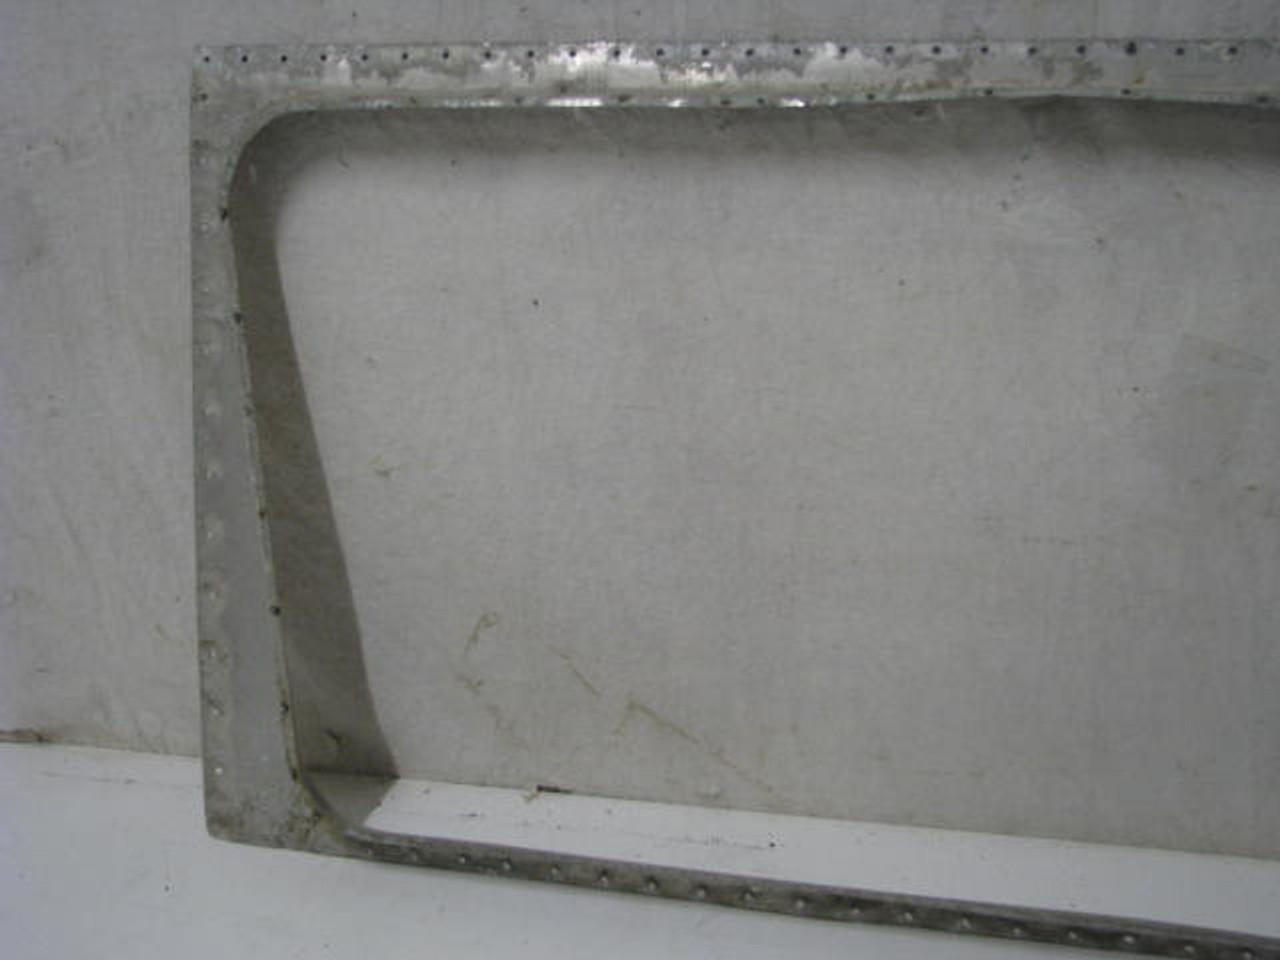 Exterior Spartan Slider Window Frame Curb Side (BP291)